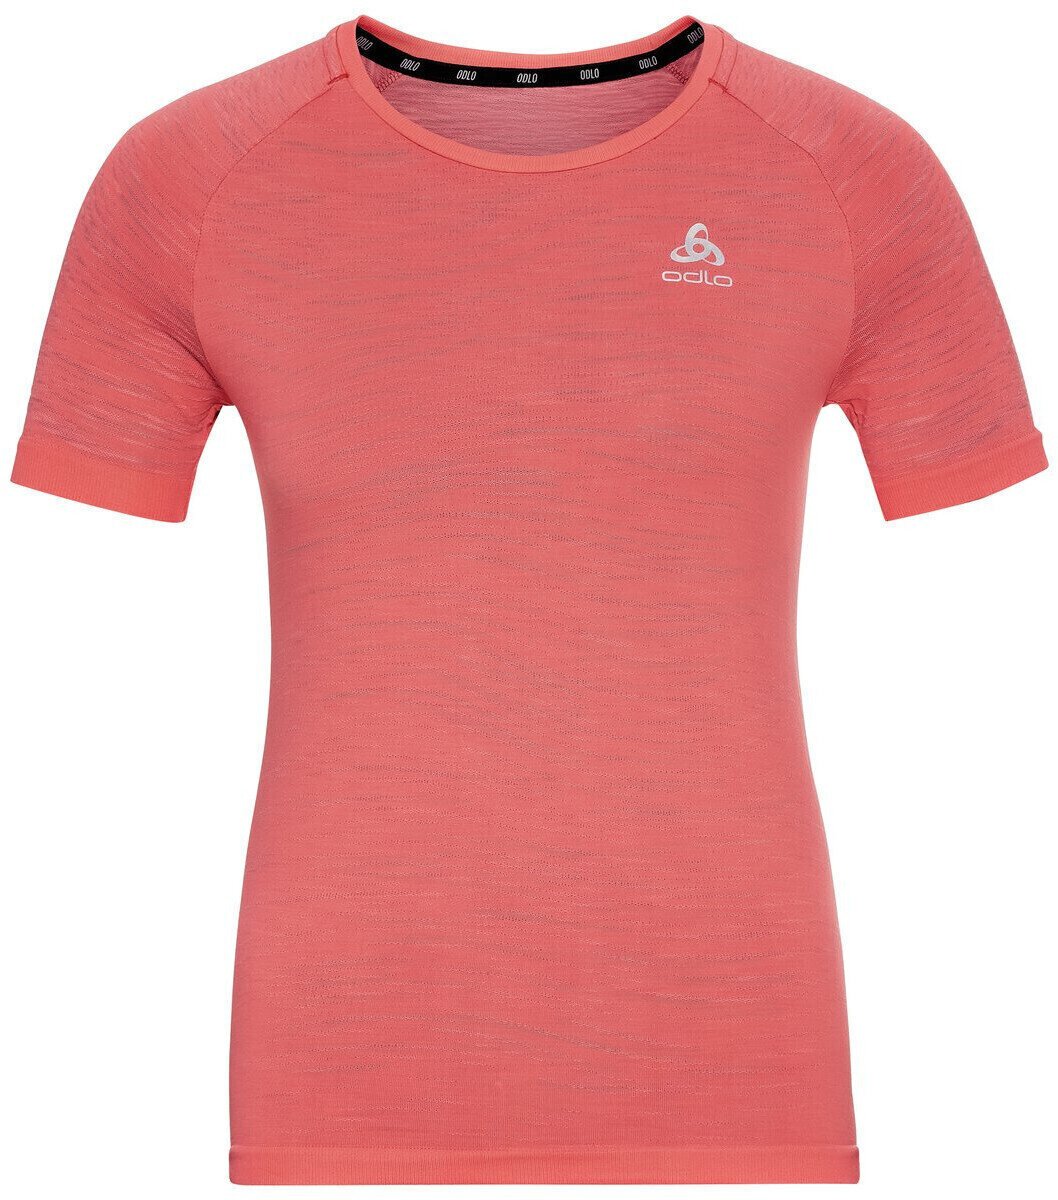 Running t-shirt with short sleeves
 Odlo Blackcomb Ceramicool T-Shirt Siesta/Space Dye XS Running t-shirt with short sleeves